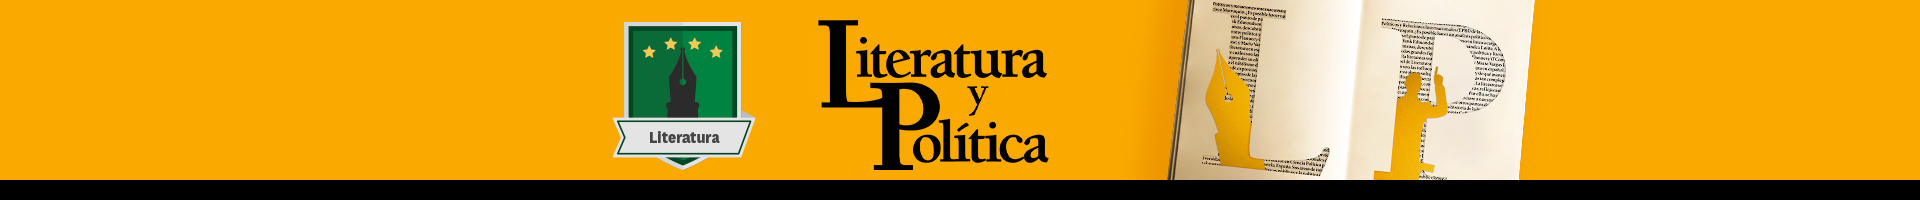 asset-v1_Ciencia-Politica+LP+2021_1+type@asset+block@1920x200_LiteraturaPolitica